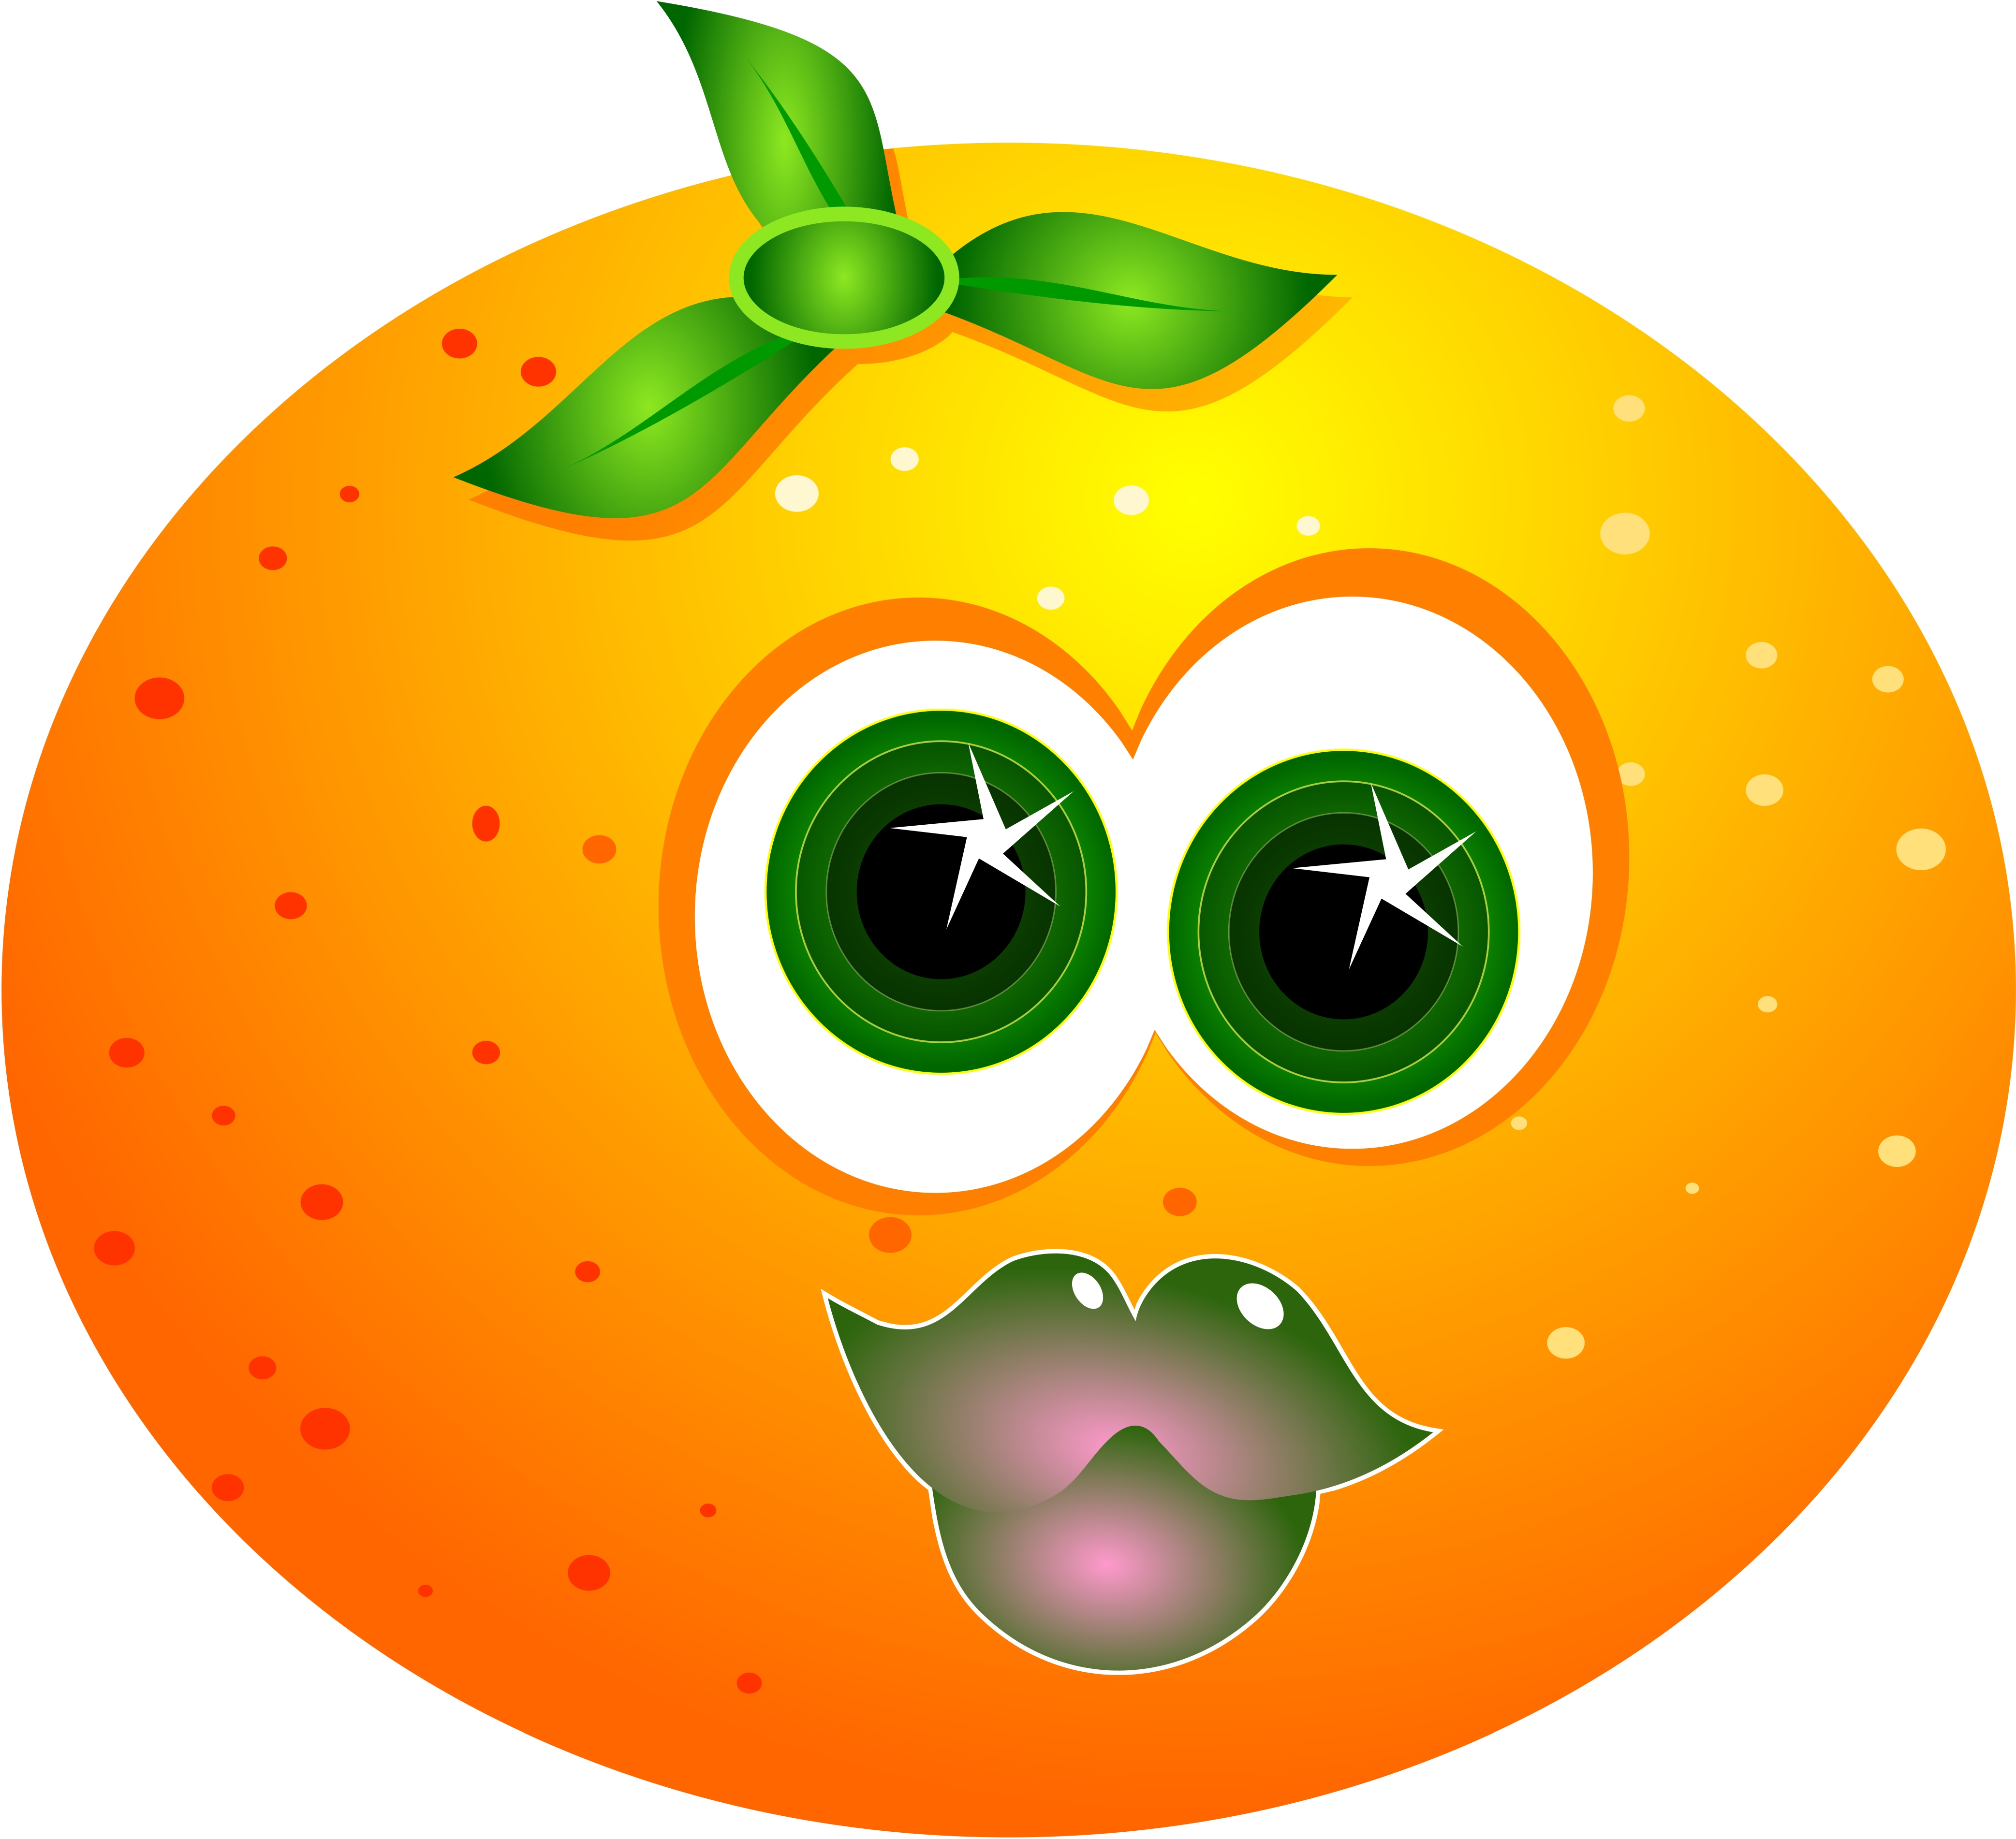 Cartoon Orange | Free Images at Clker.com - vector clip ...